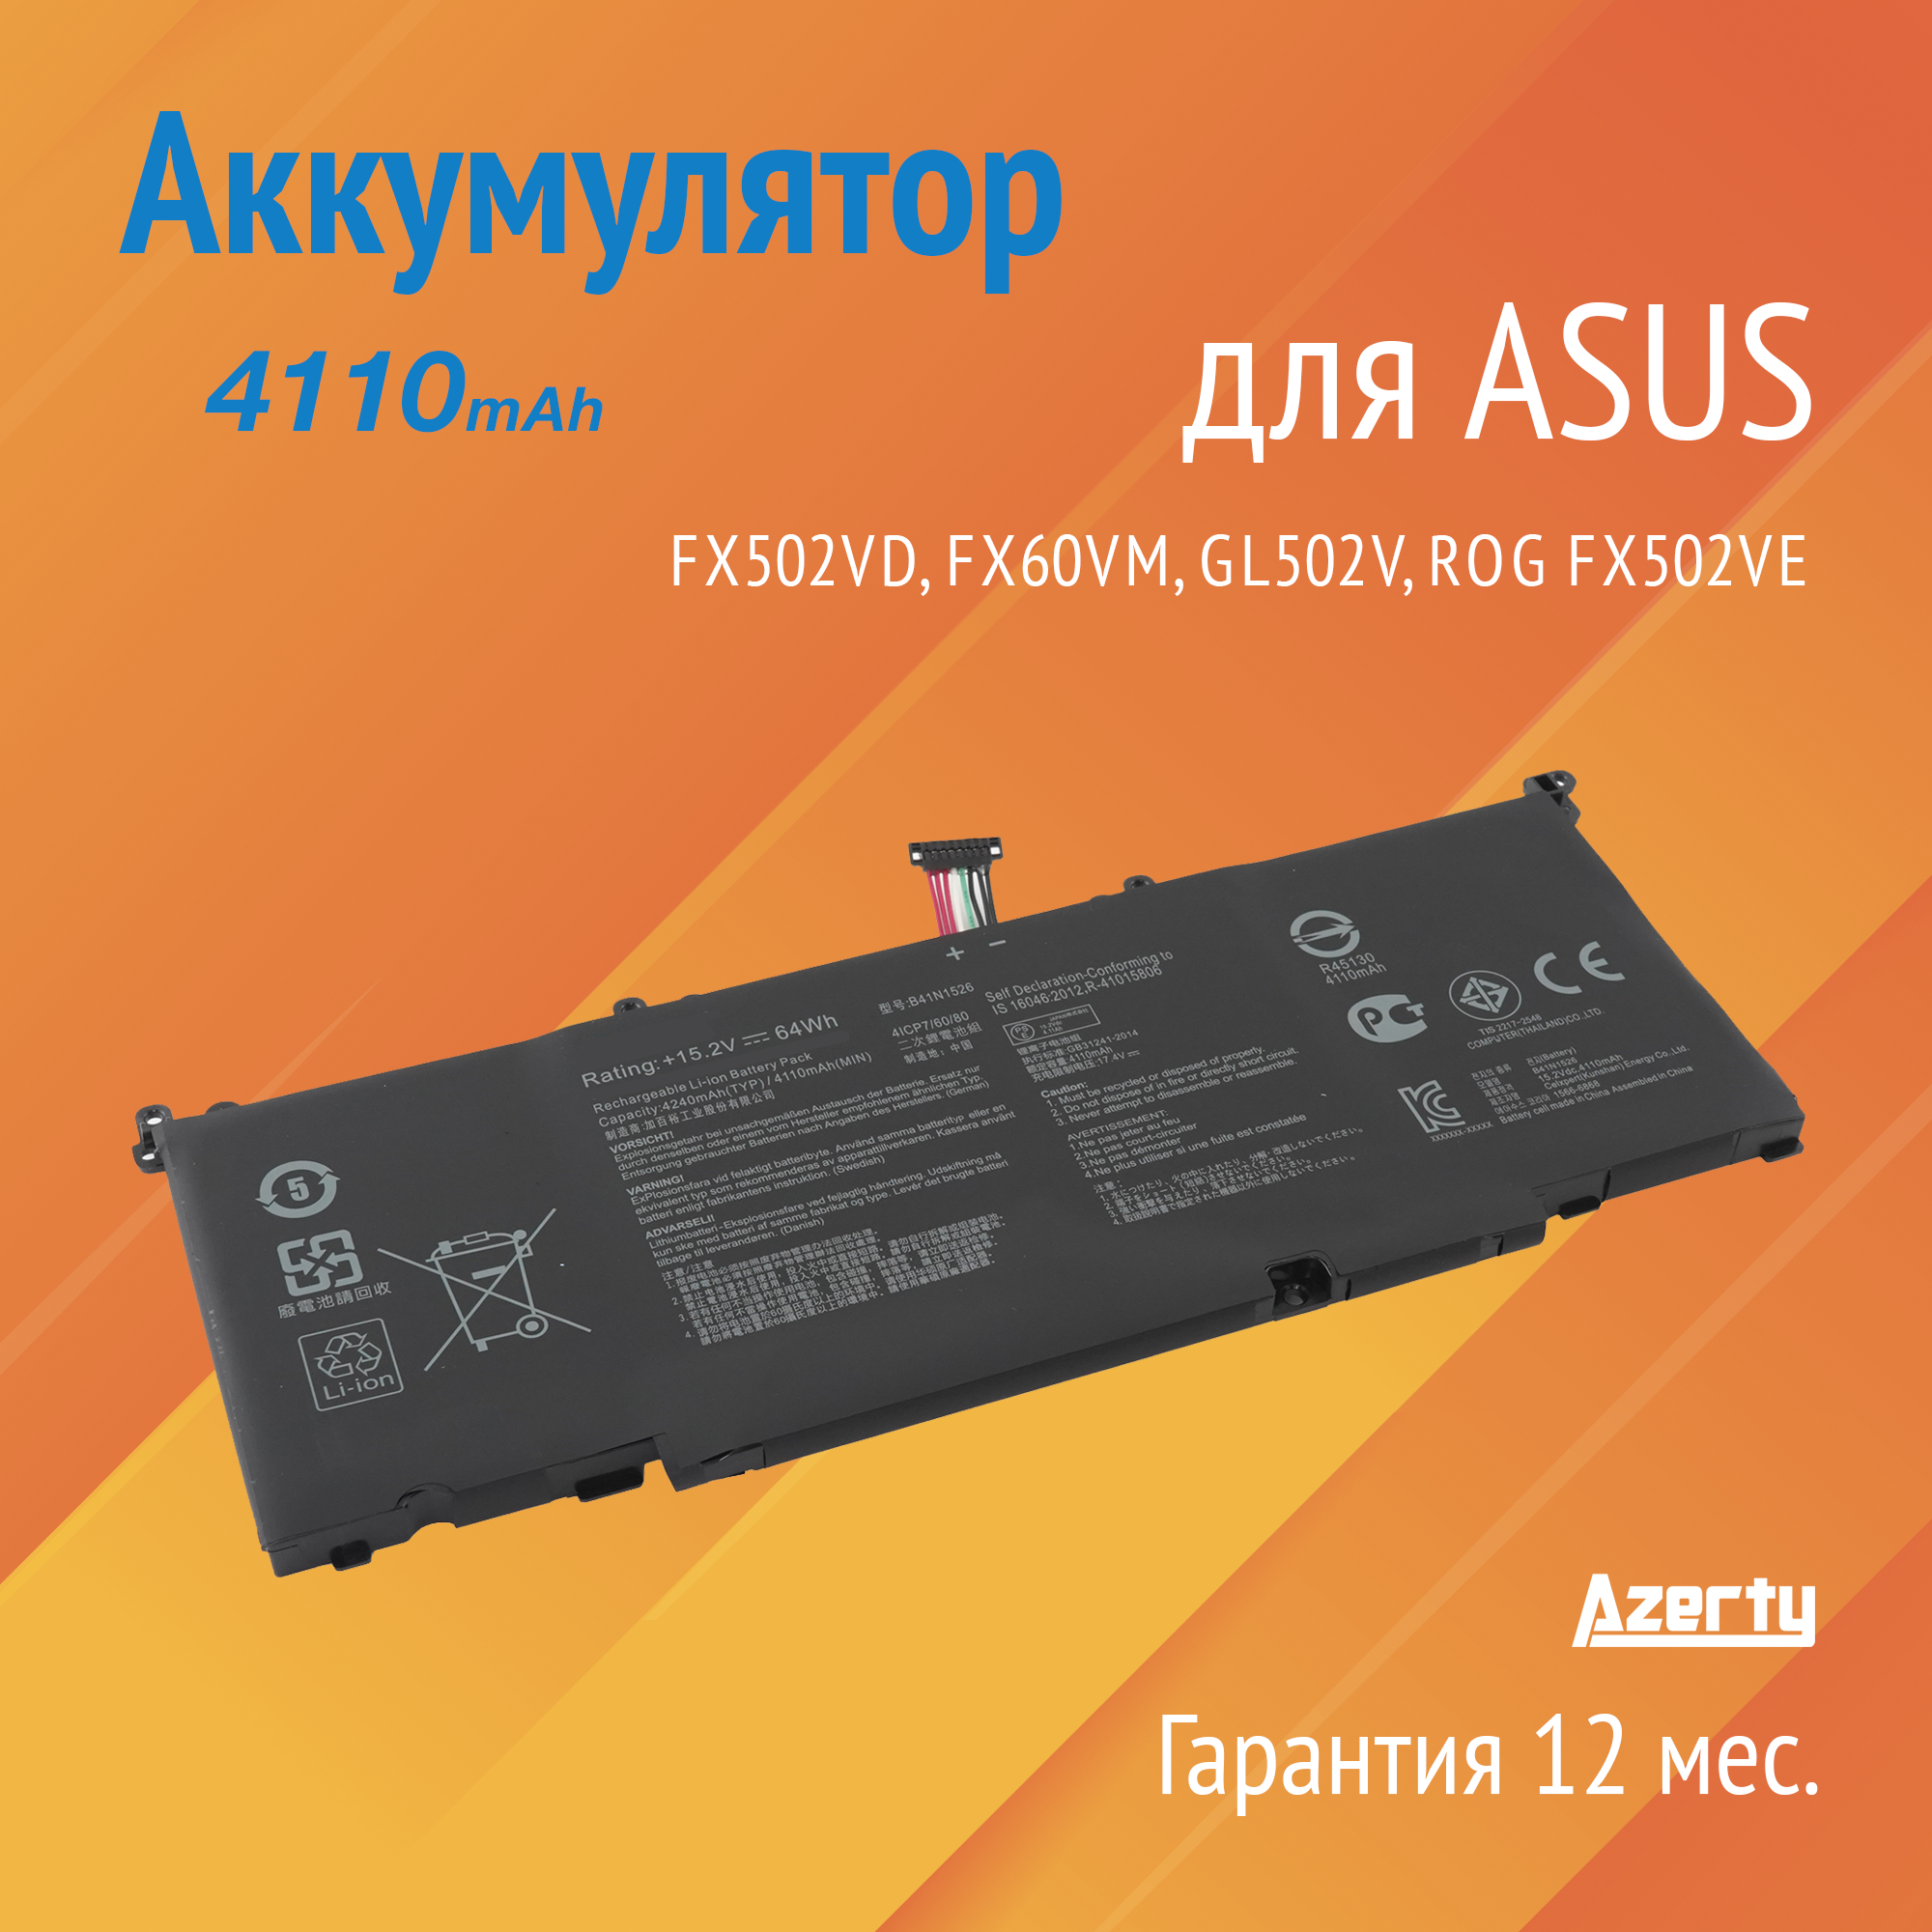 Аккумулятор B41N1526 для Asus FX502VD / FX60VM / GL502V / ROG FX502VE / ROG S5 / ROG Strix GL502